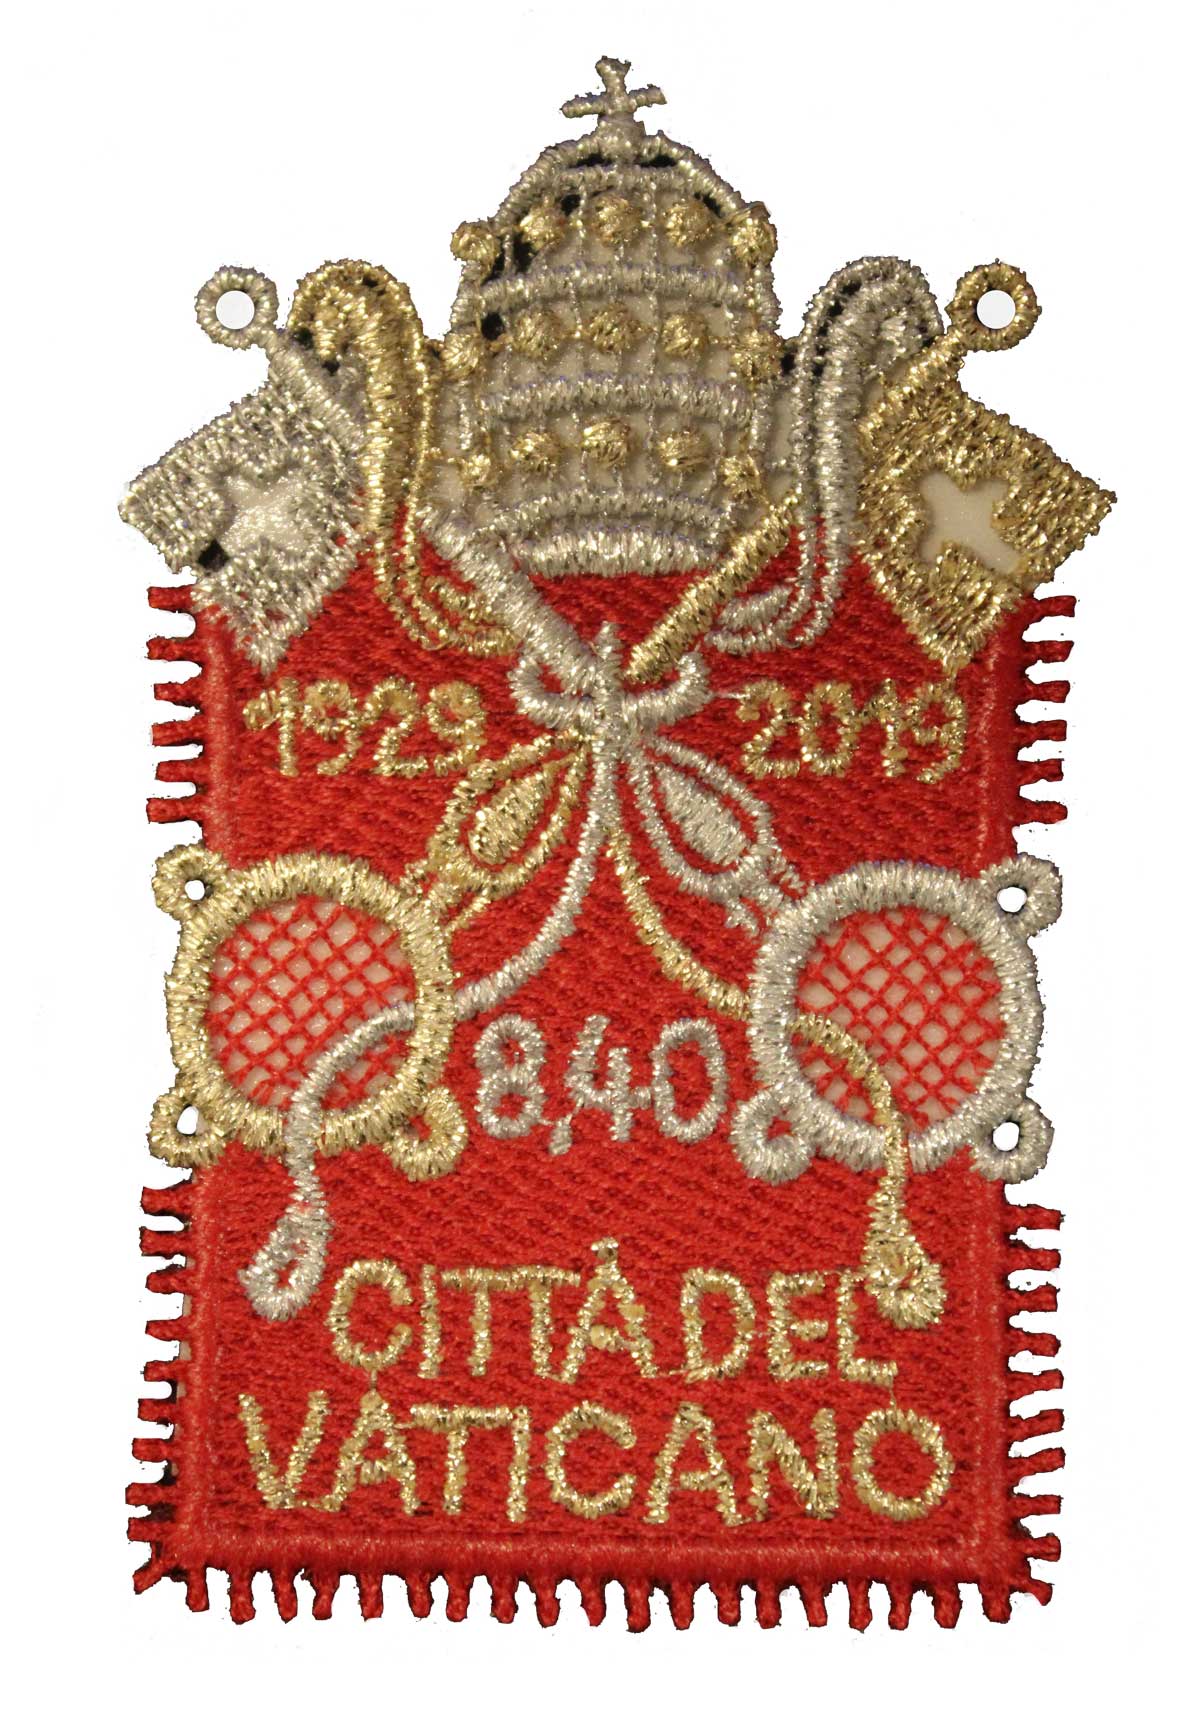 16457_188_francobollo-vaticano.jpg